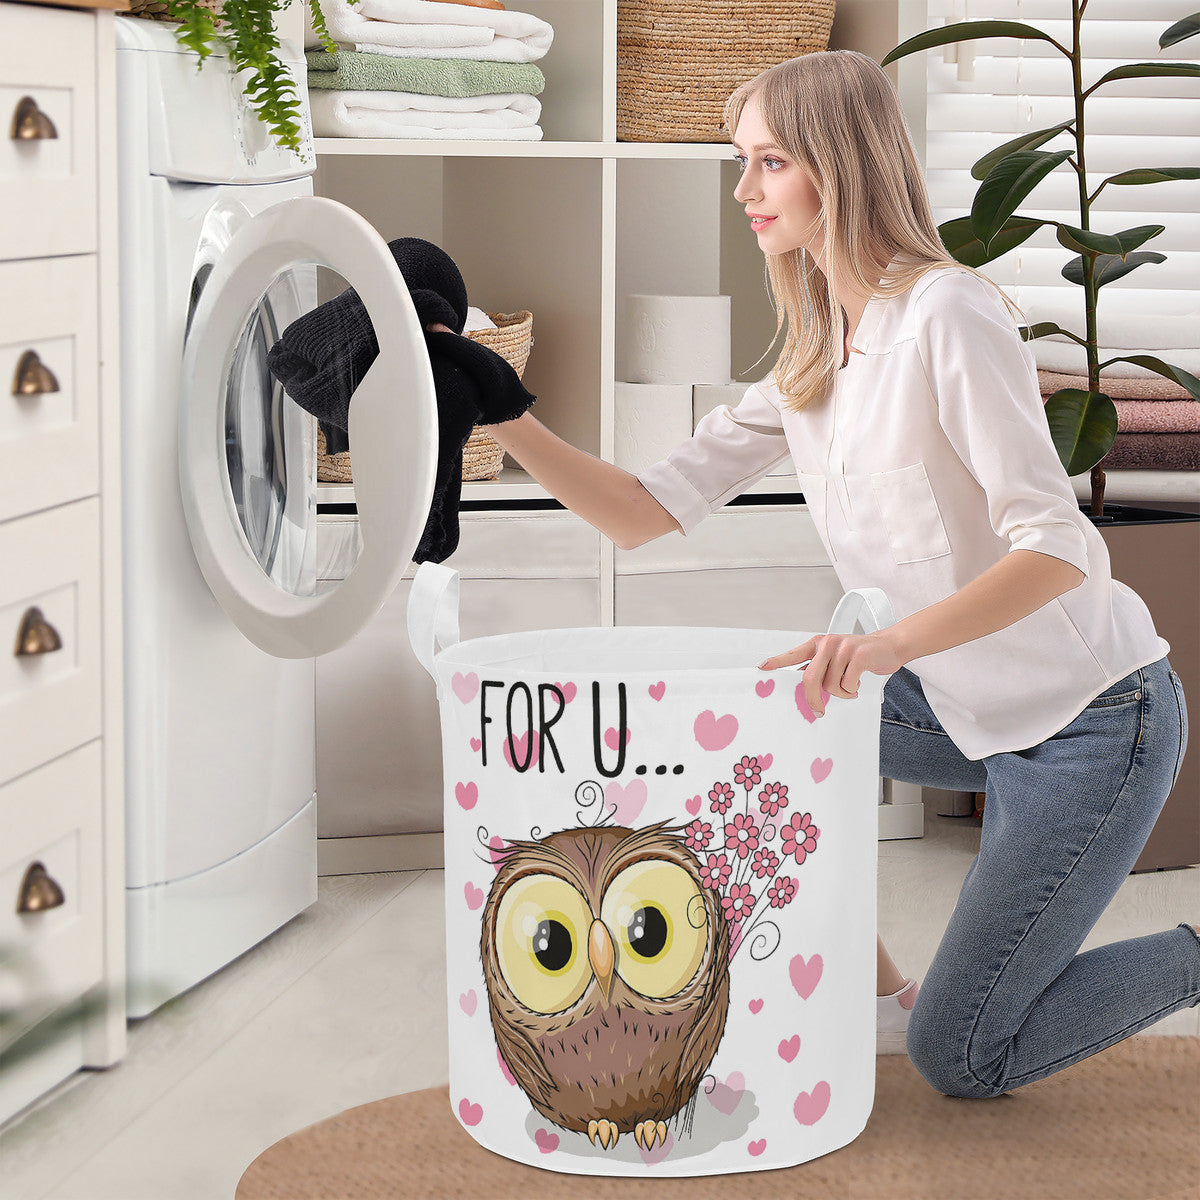 Round Laundry Basket Owl for you, Valentine&